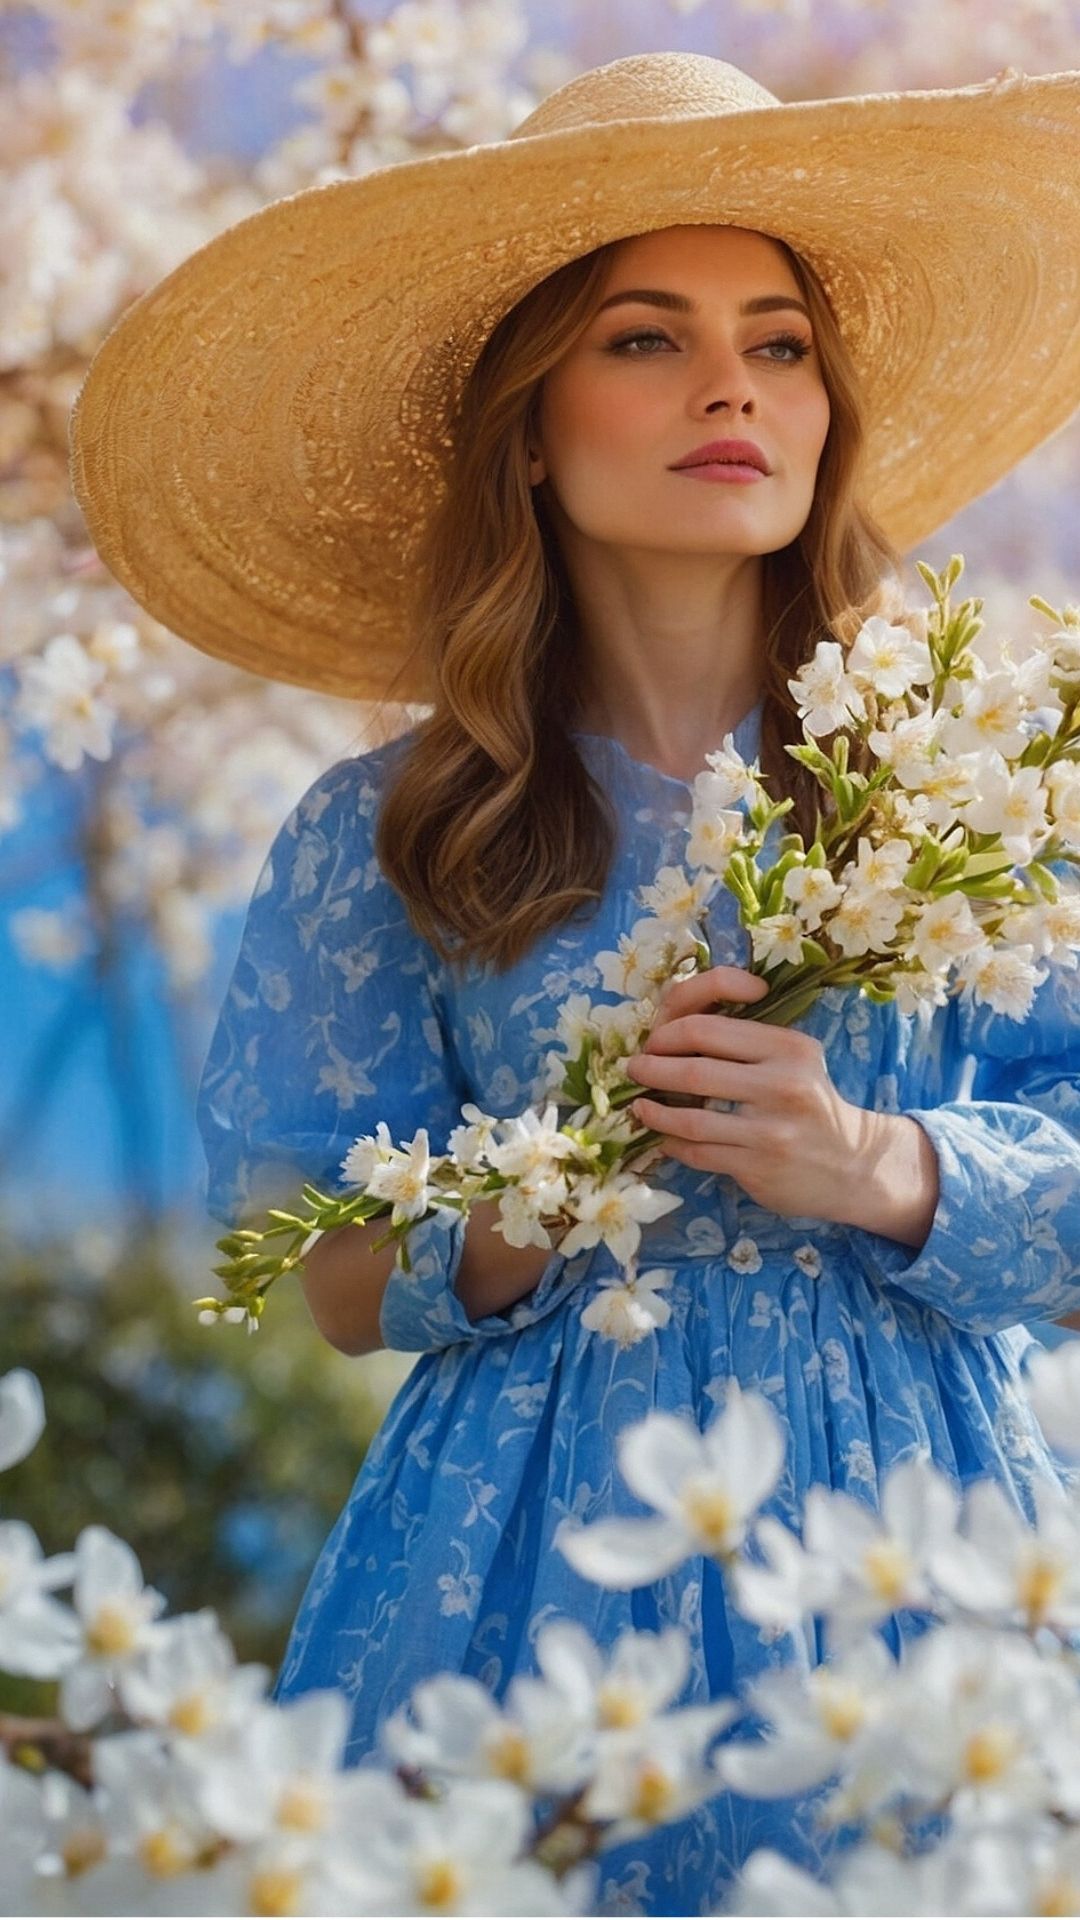 Blossom Beauty: Pastoral Blue Dress & Wide-Brimmed Hat in Spring